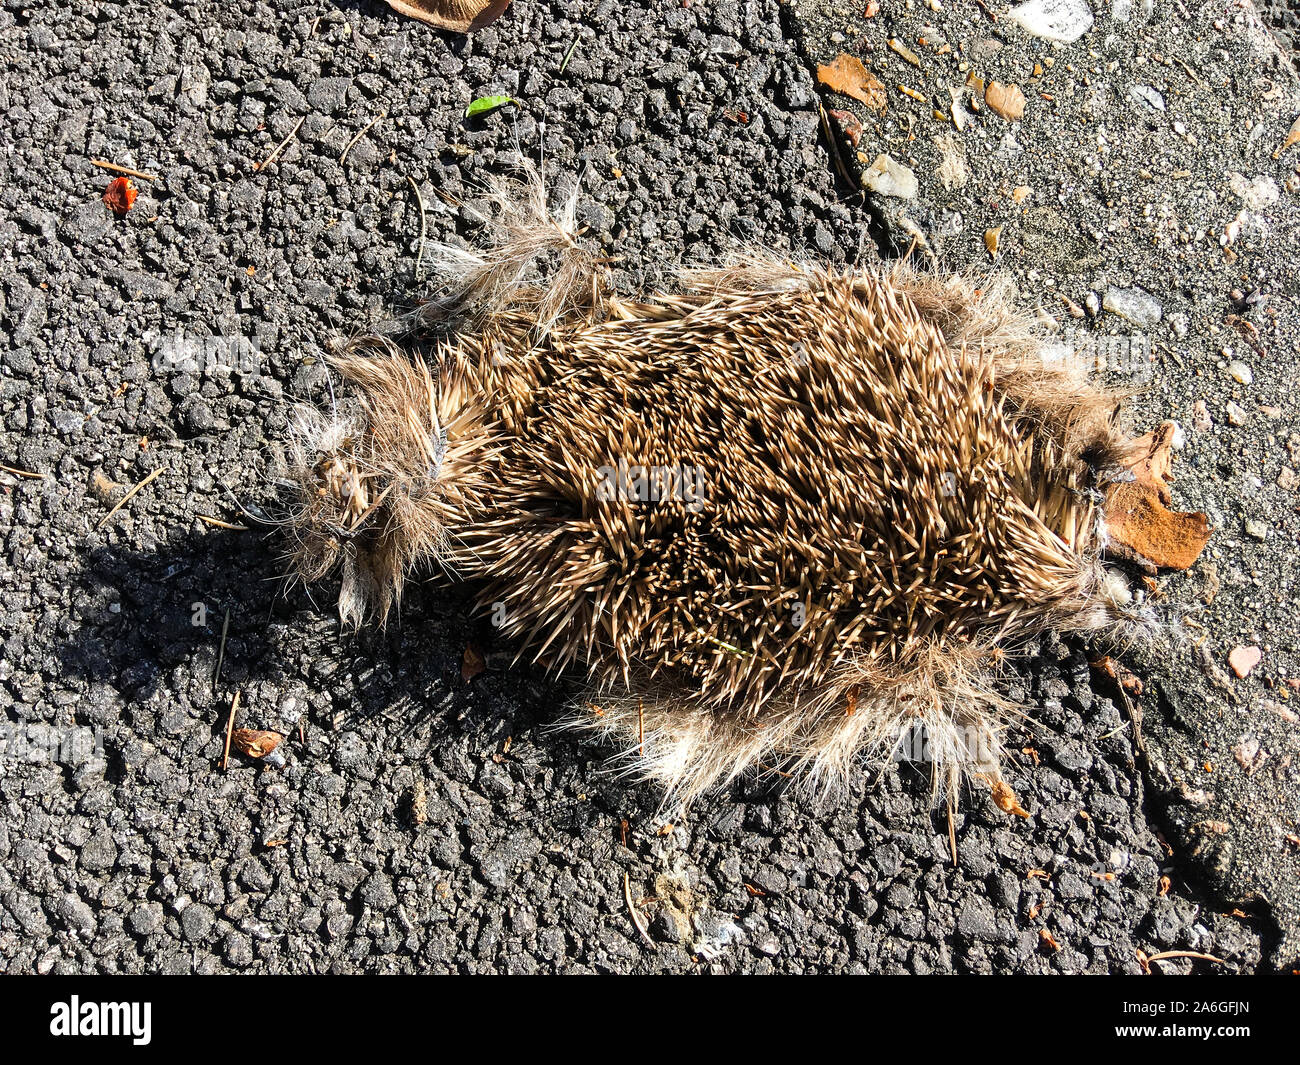 Dead hedgehog, Bron, Lyon, France Stock Photo